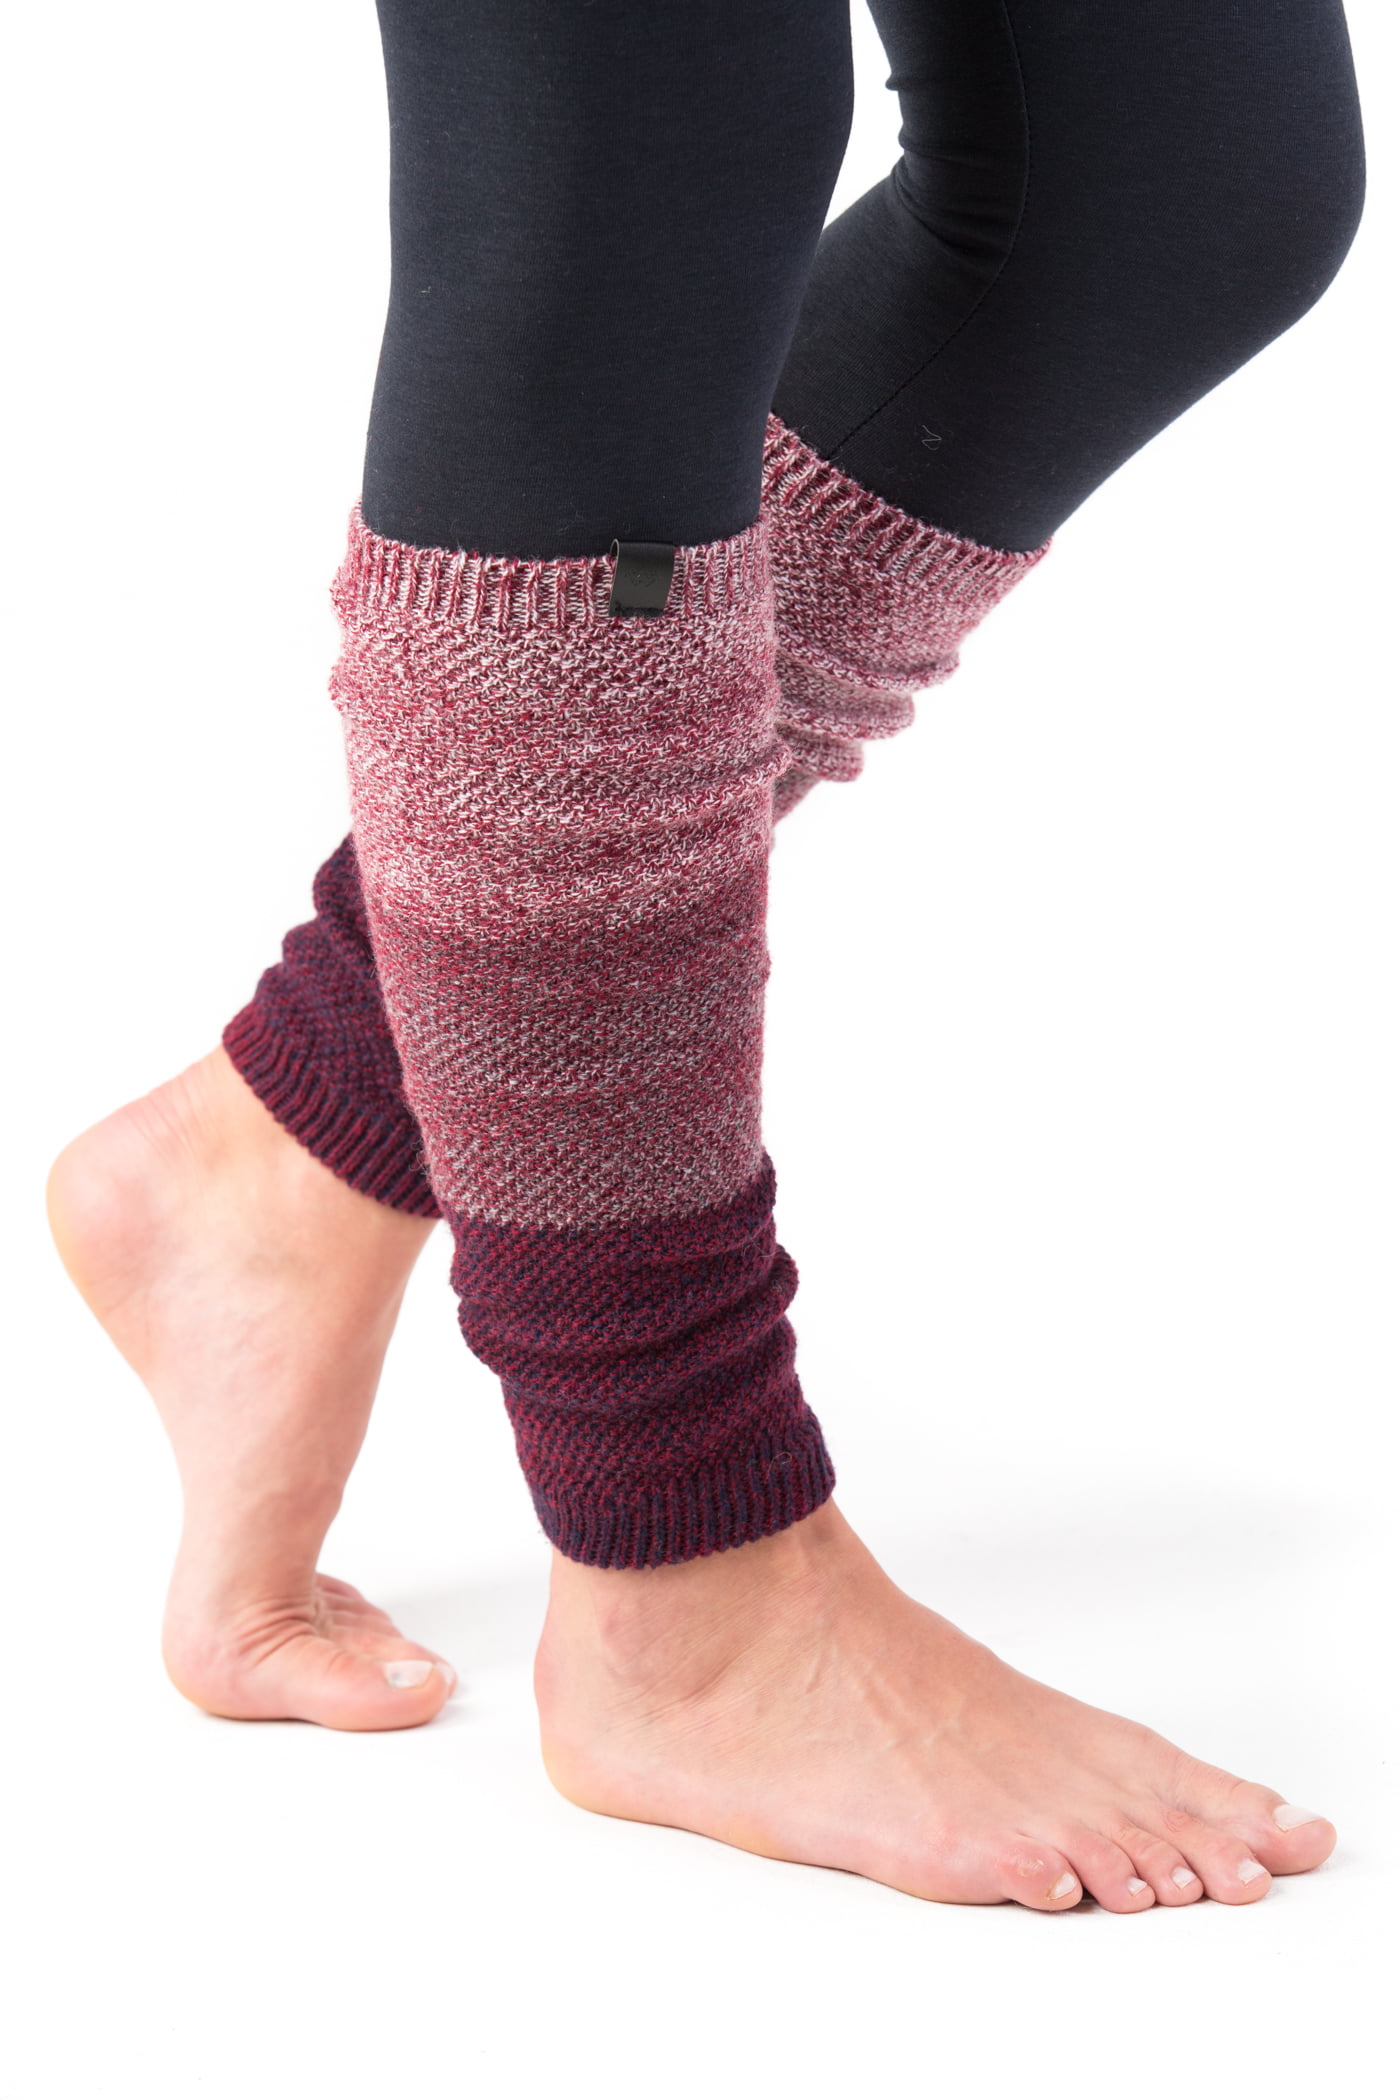 Marino Long Leg Warmers For Women Winter Knee High Knit Leg Warmer